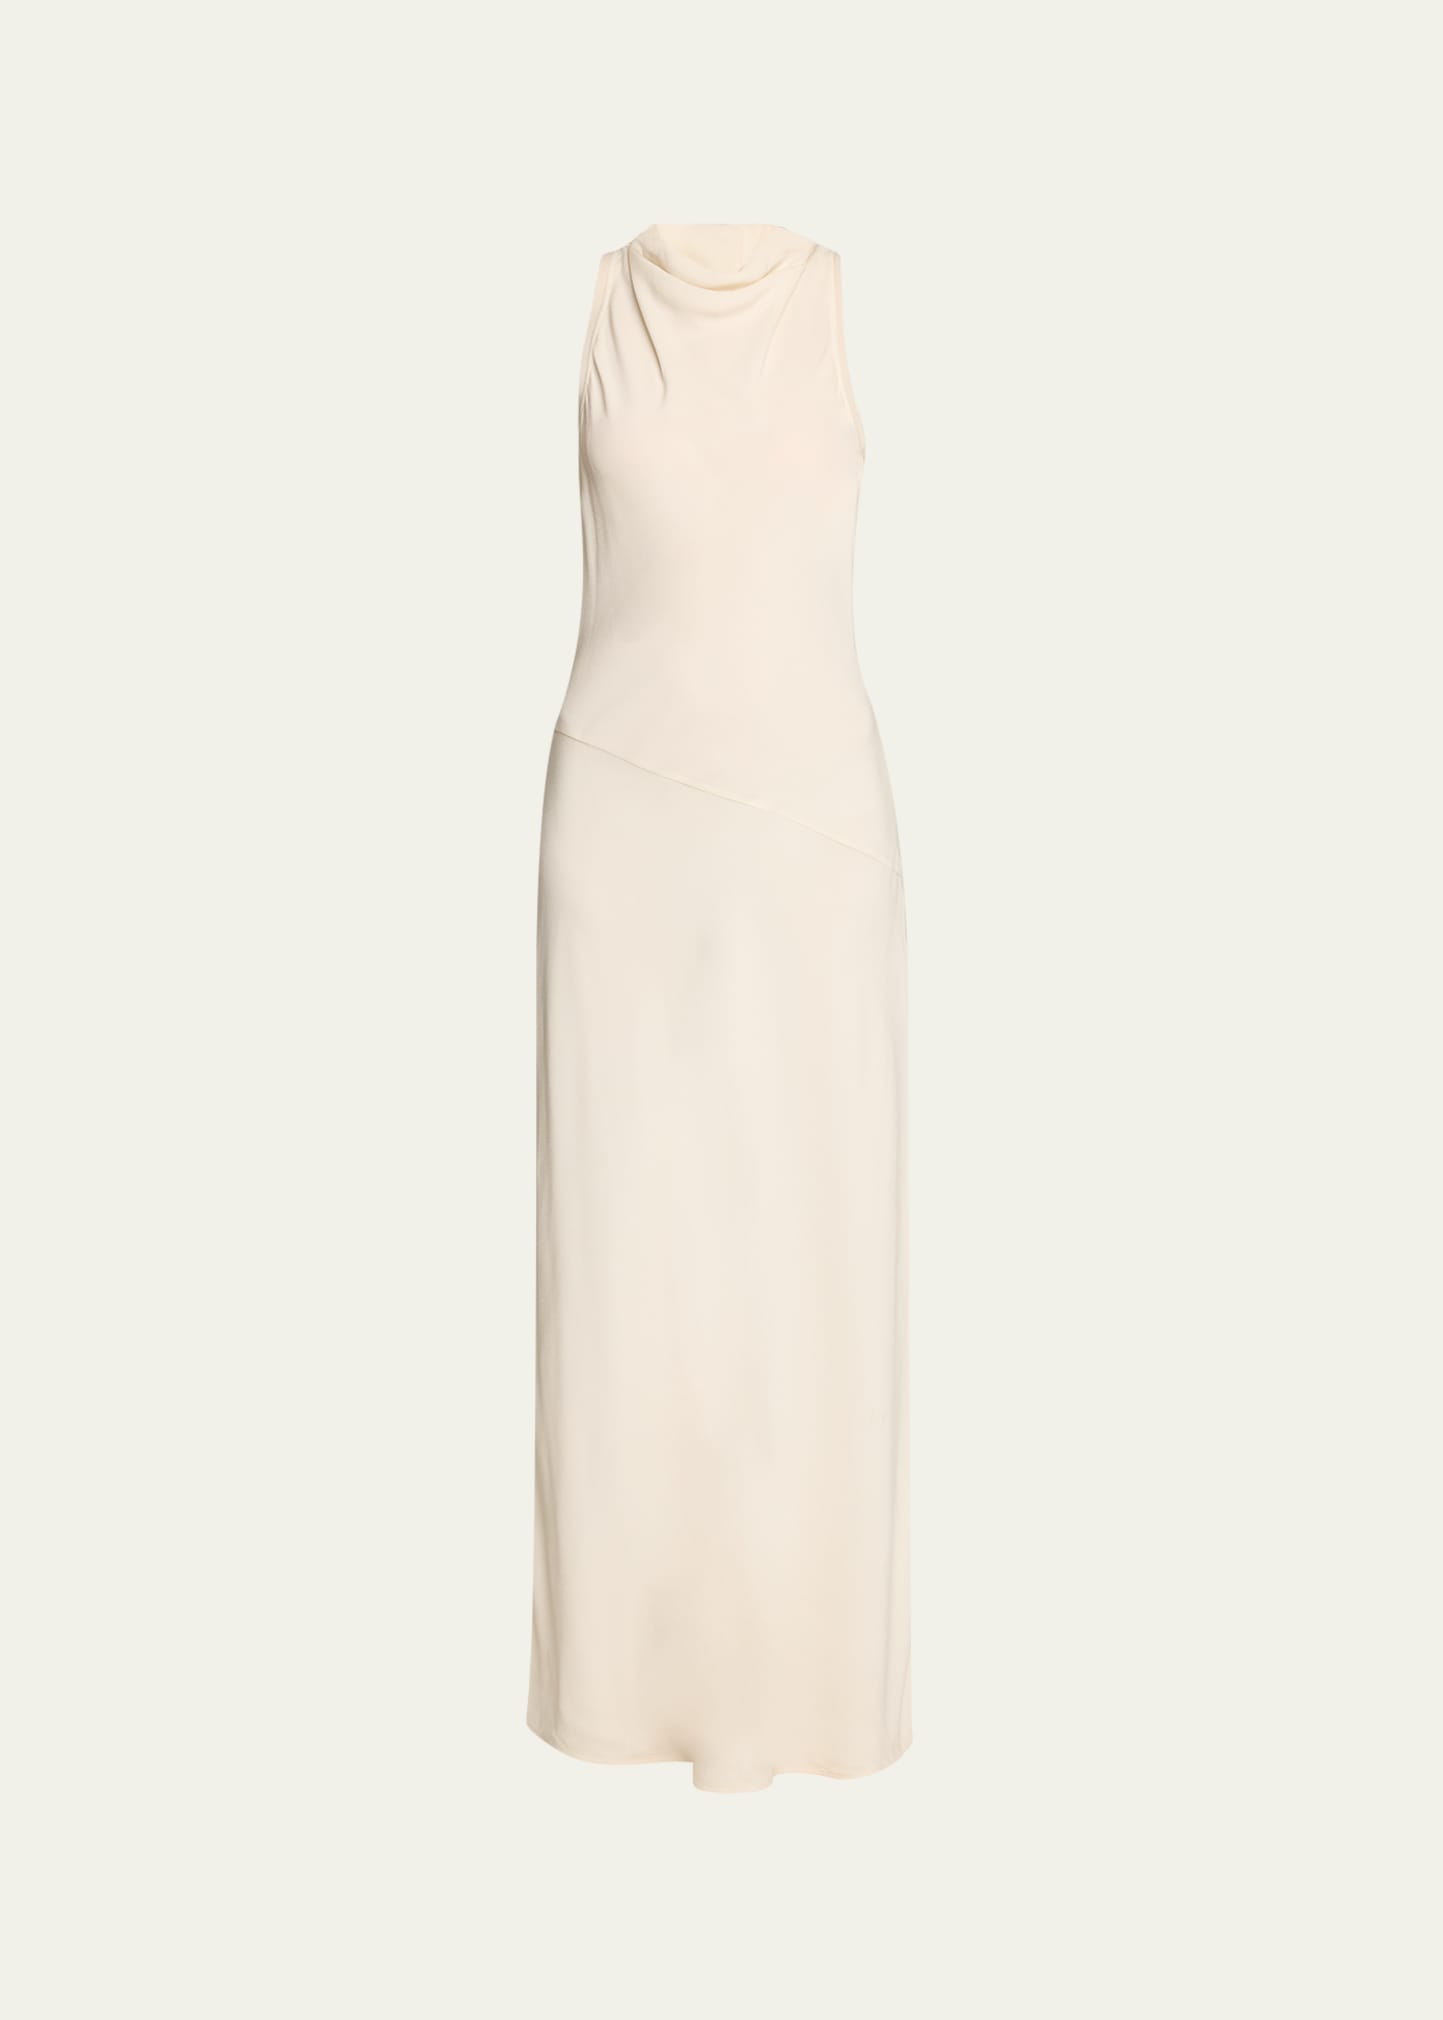 Kalena Cowl-Neck Dress